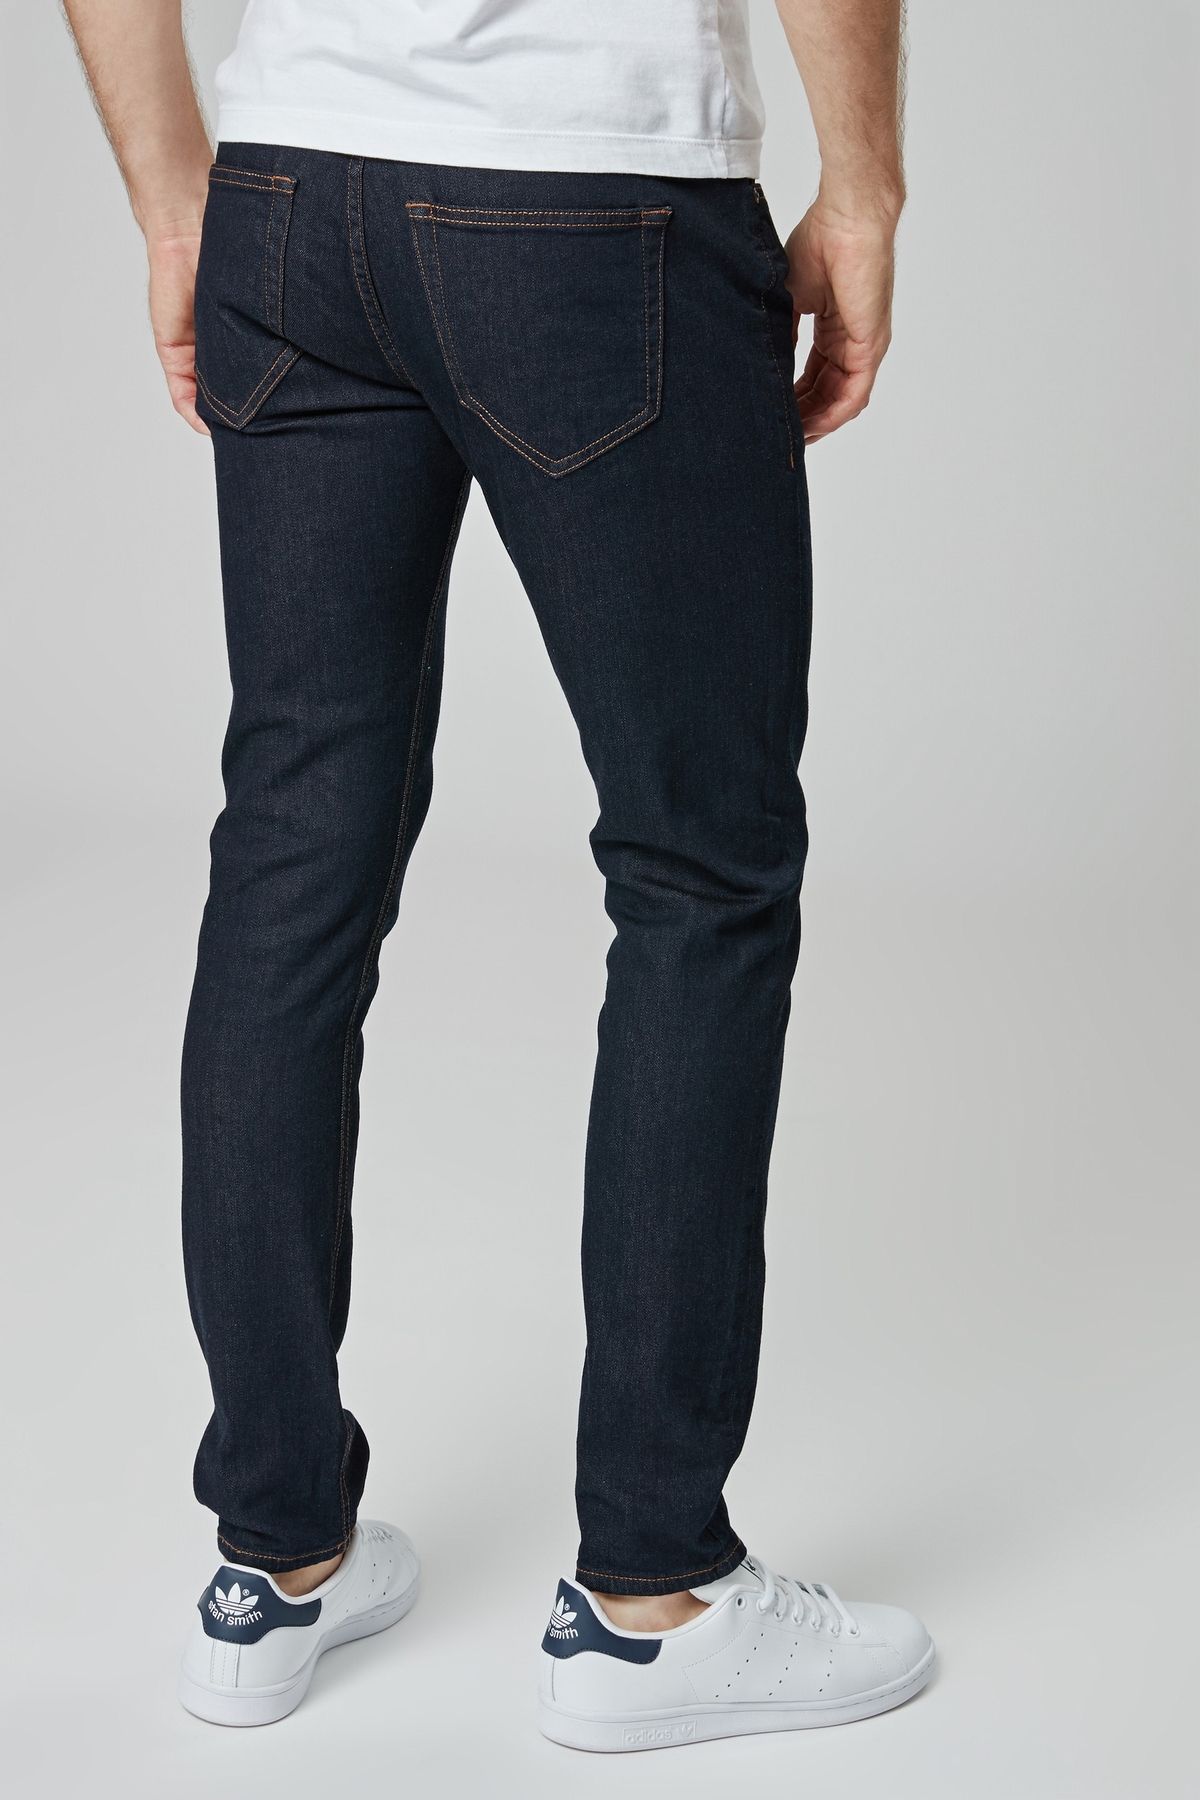 NEXT Jeans With Stretch Blue Men Jeans|akgalleria.com